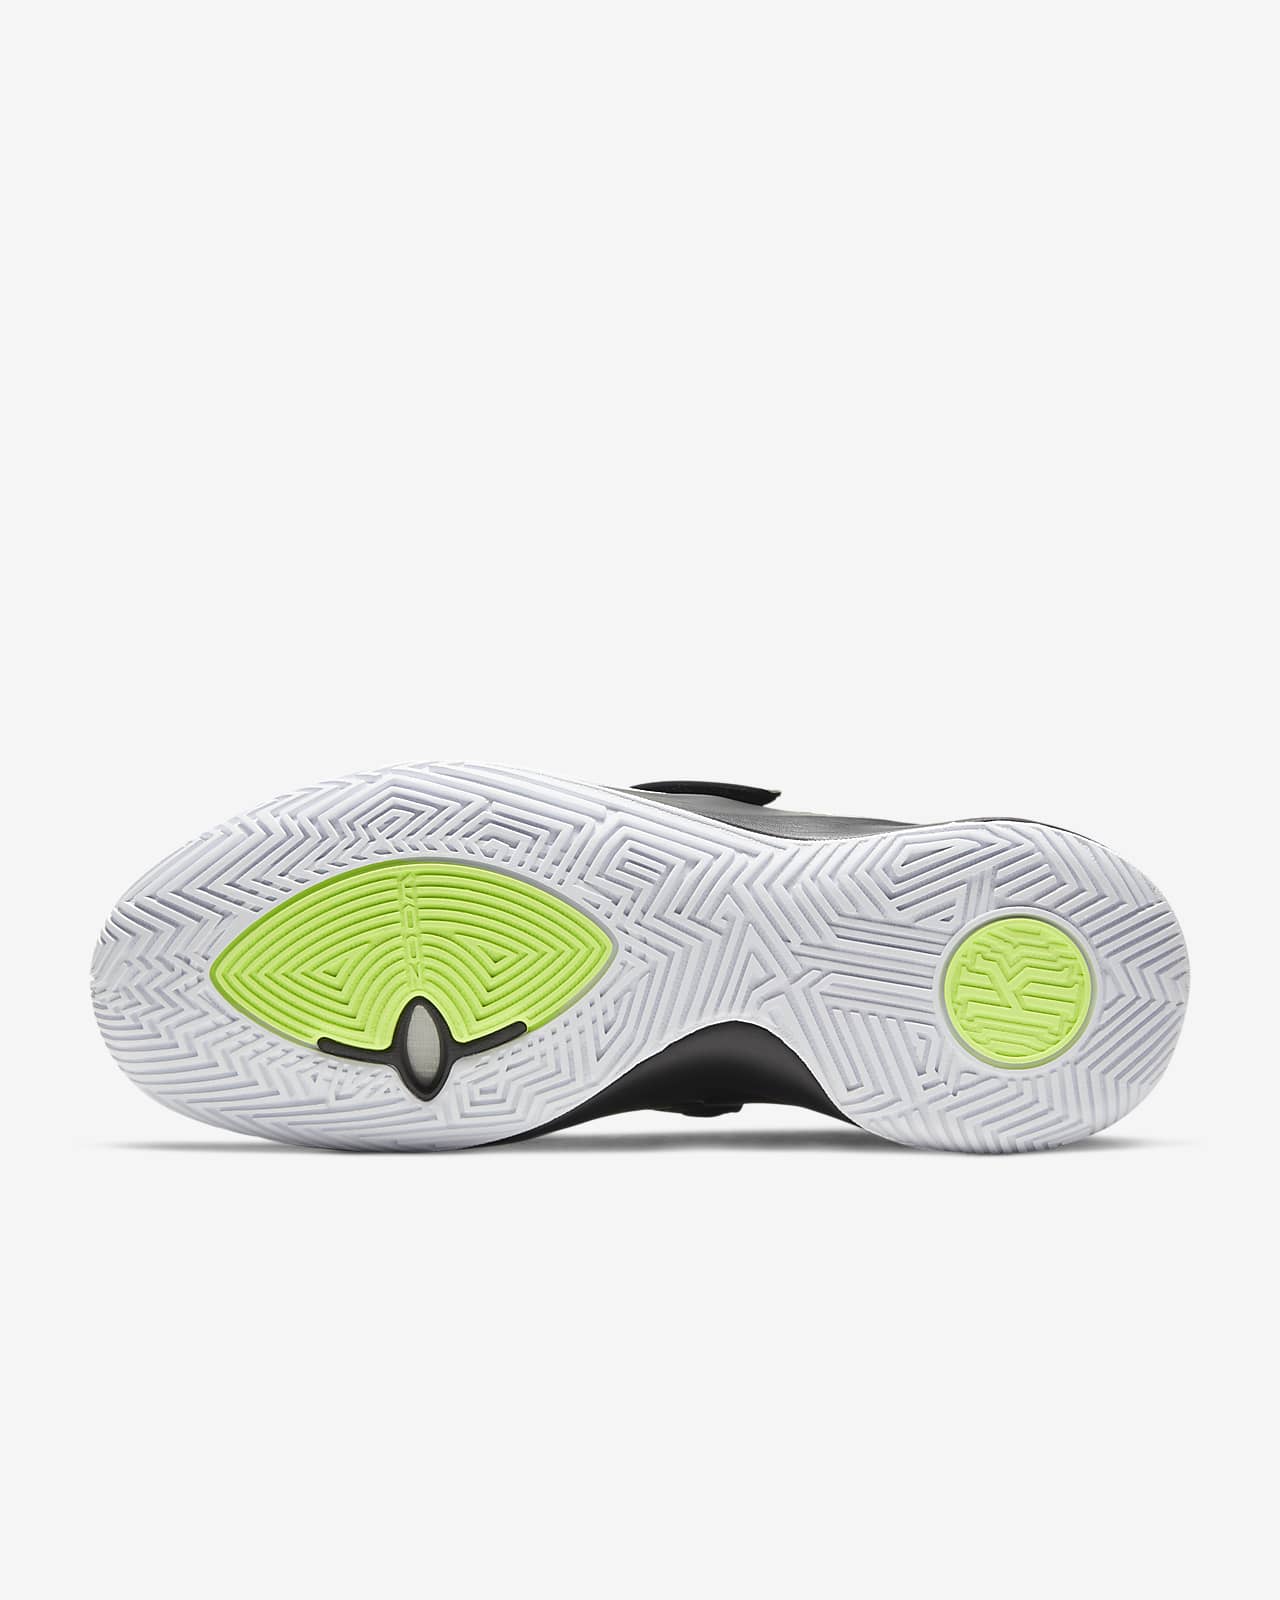 kyrie flytrap iii basketball shoe